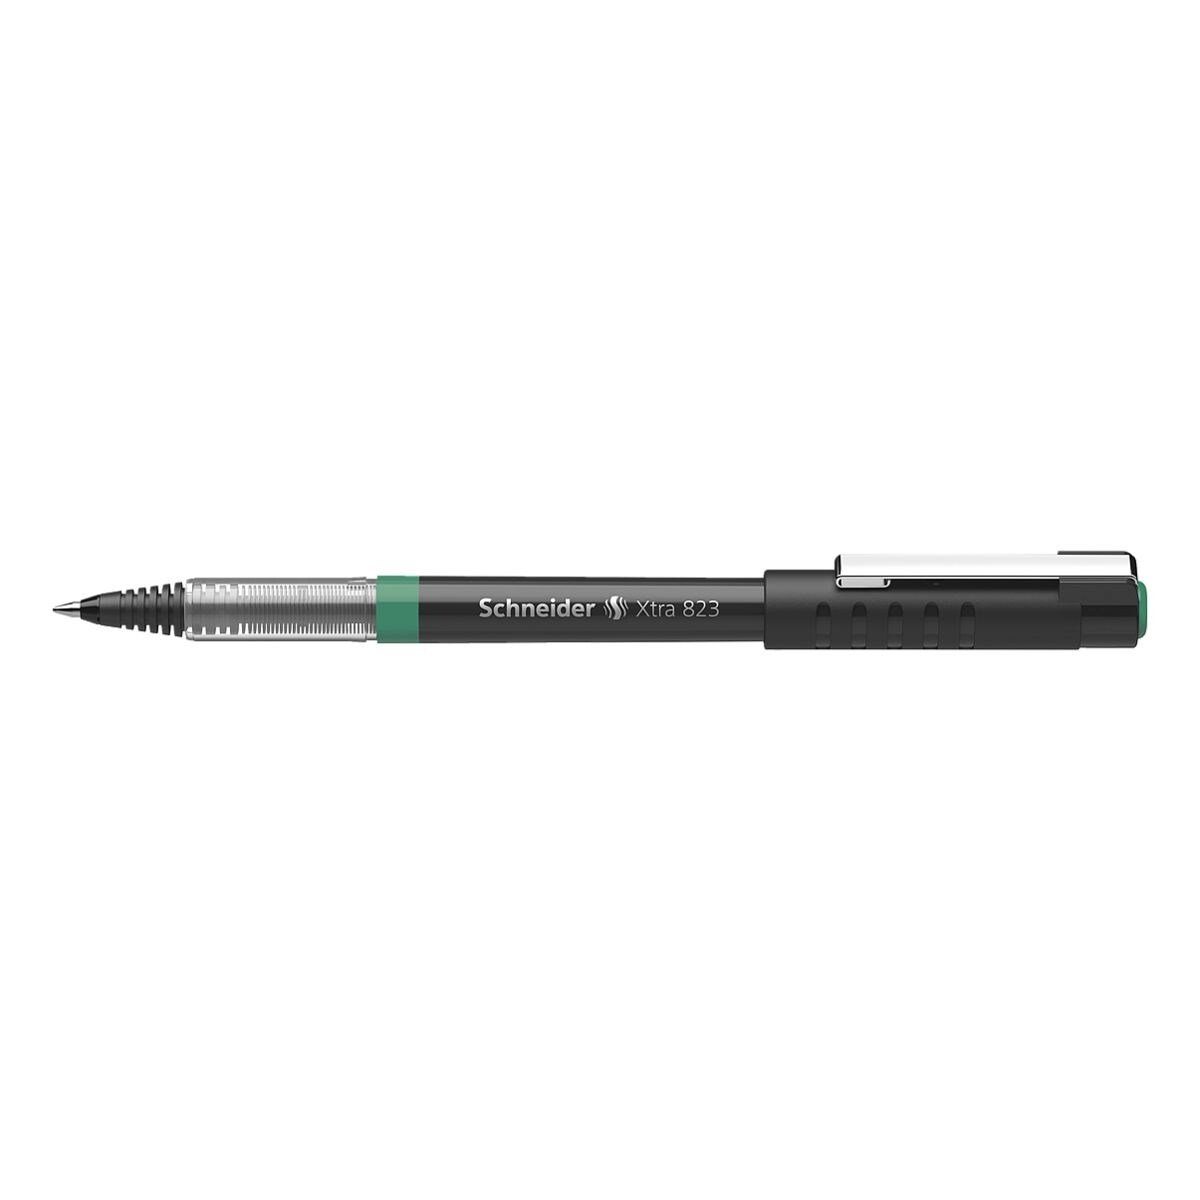 Tintenroller Strichstärke: 823, 0,3 mm Xtra Schneider grün (F)